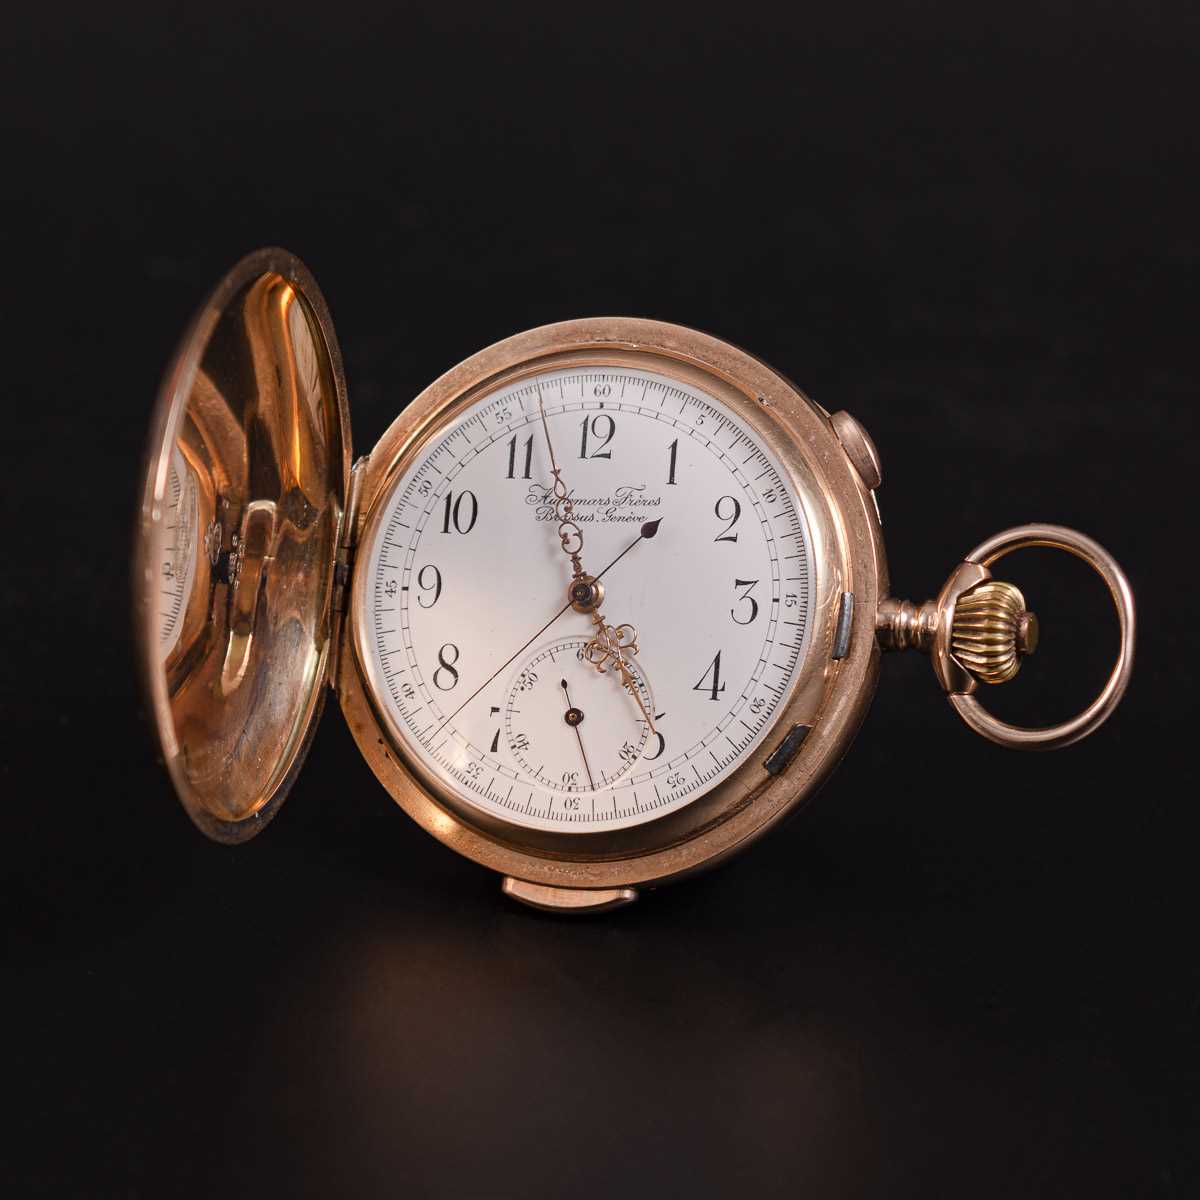 Lot 174 - Audermars Freres Brassus Geneve - quarter hour repeating chronograph full hunter pocket watch.